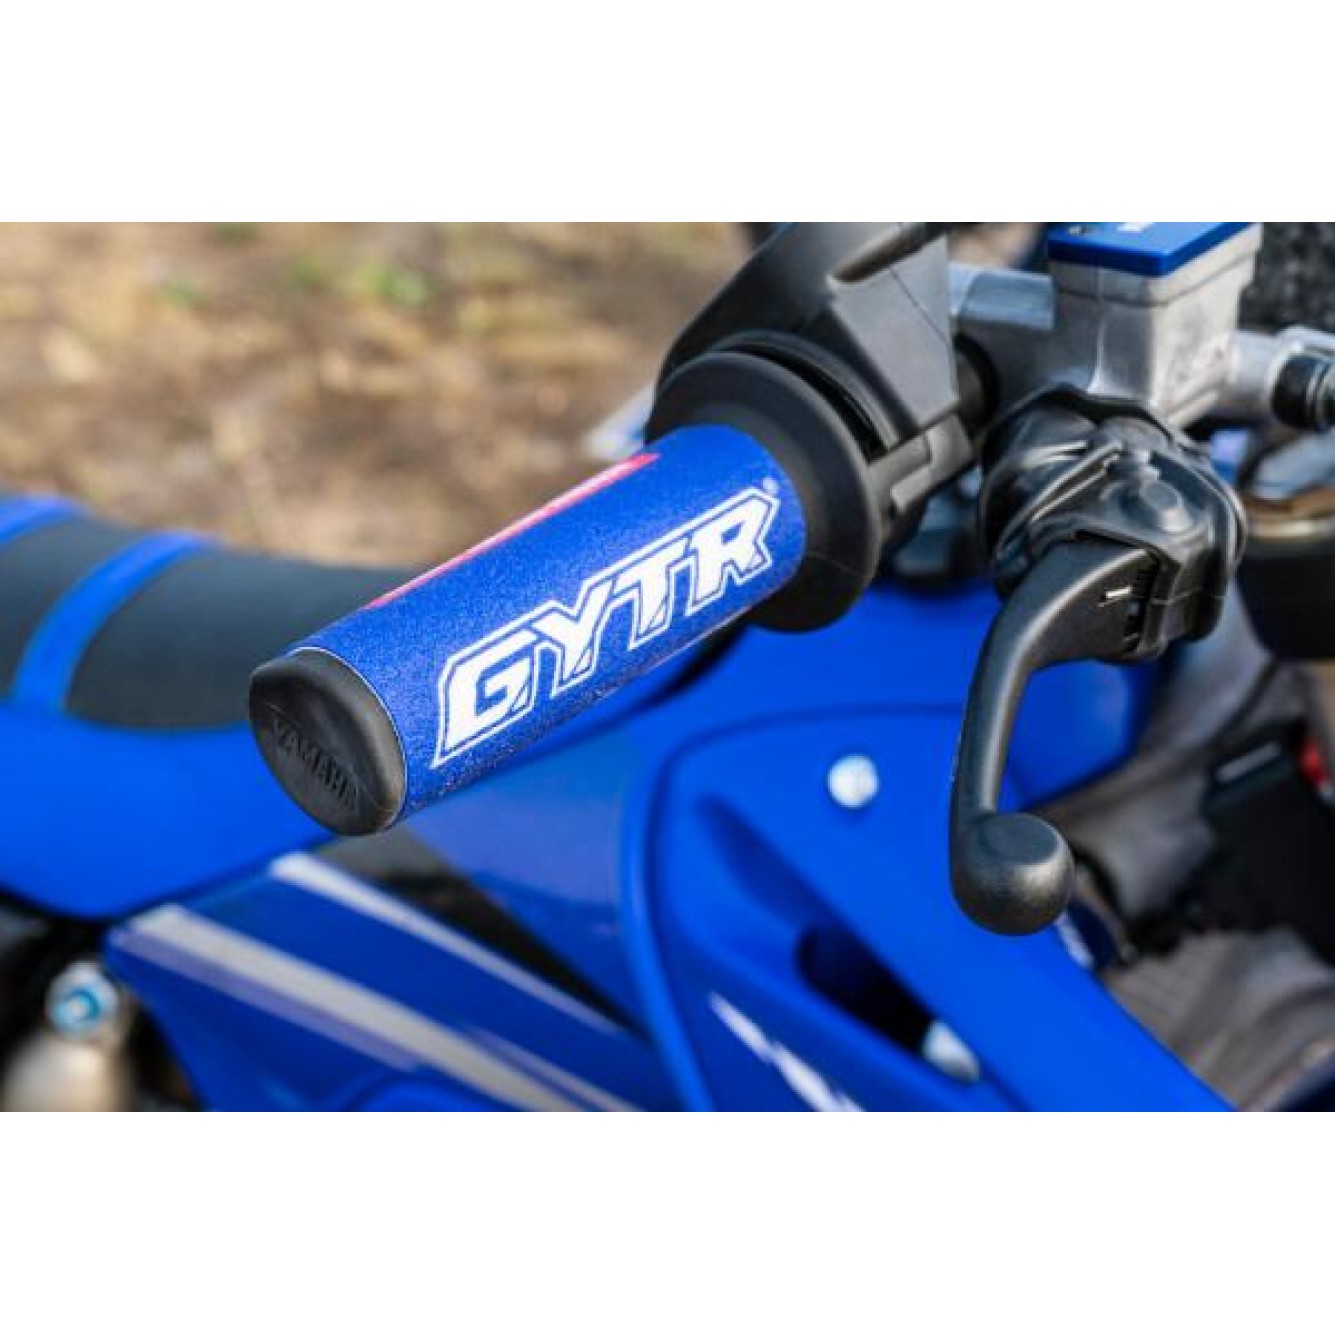 Yamaha | GYTR Handgreepbeschermers 